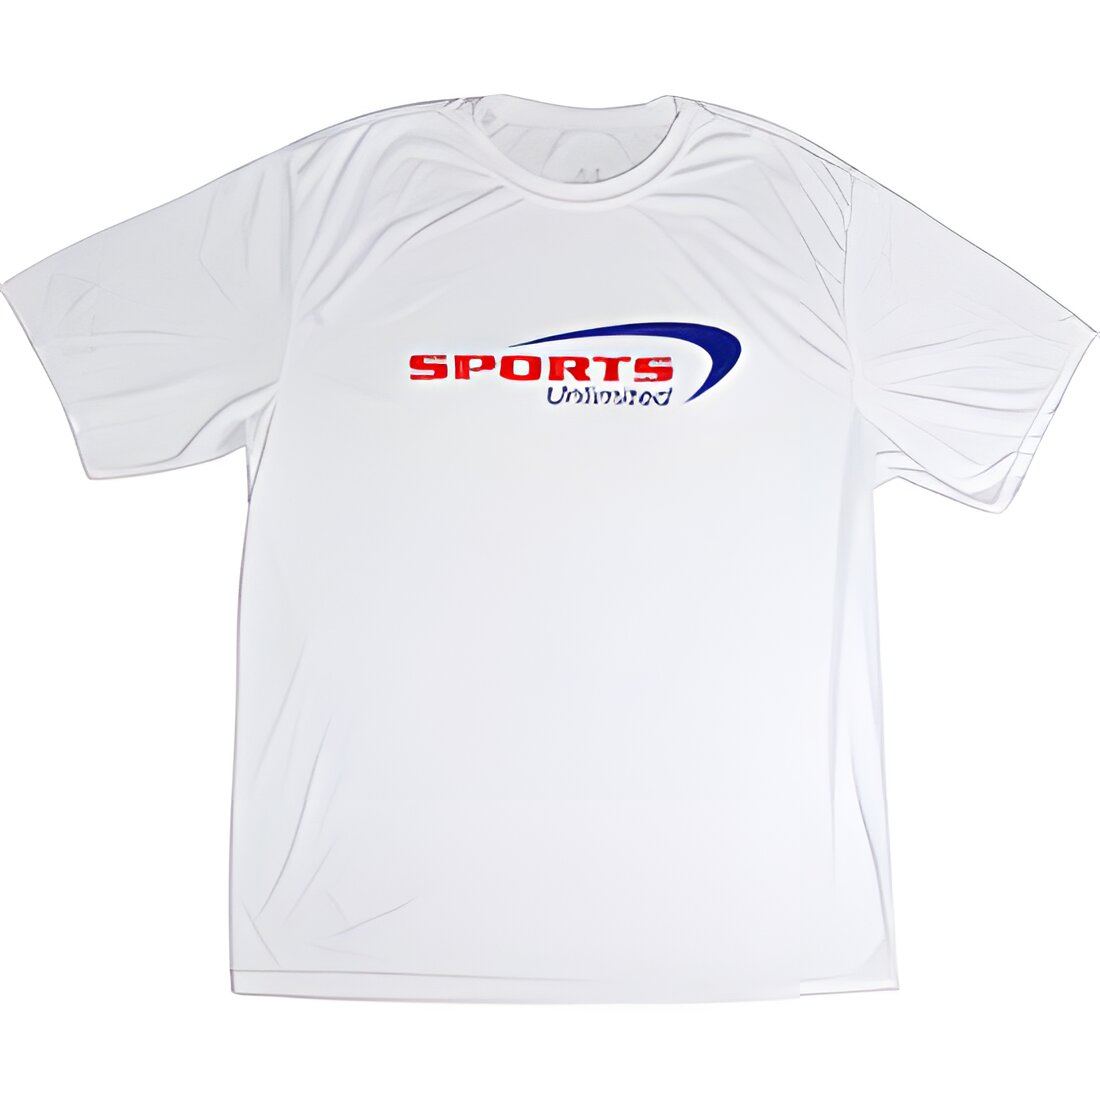 Free Sports Unlimited T-Shirt